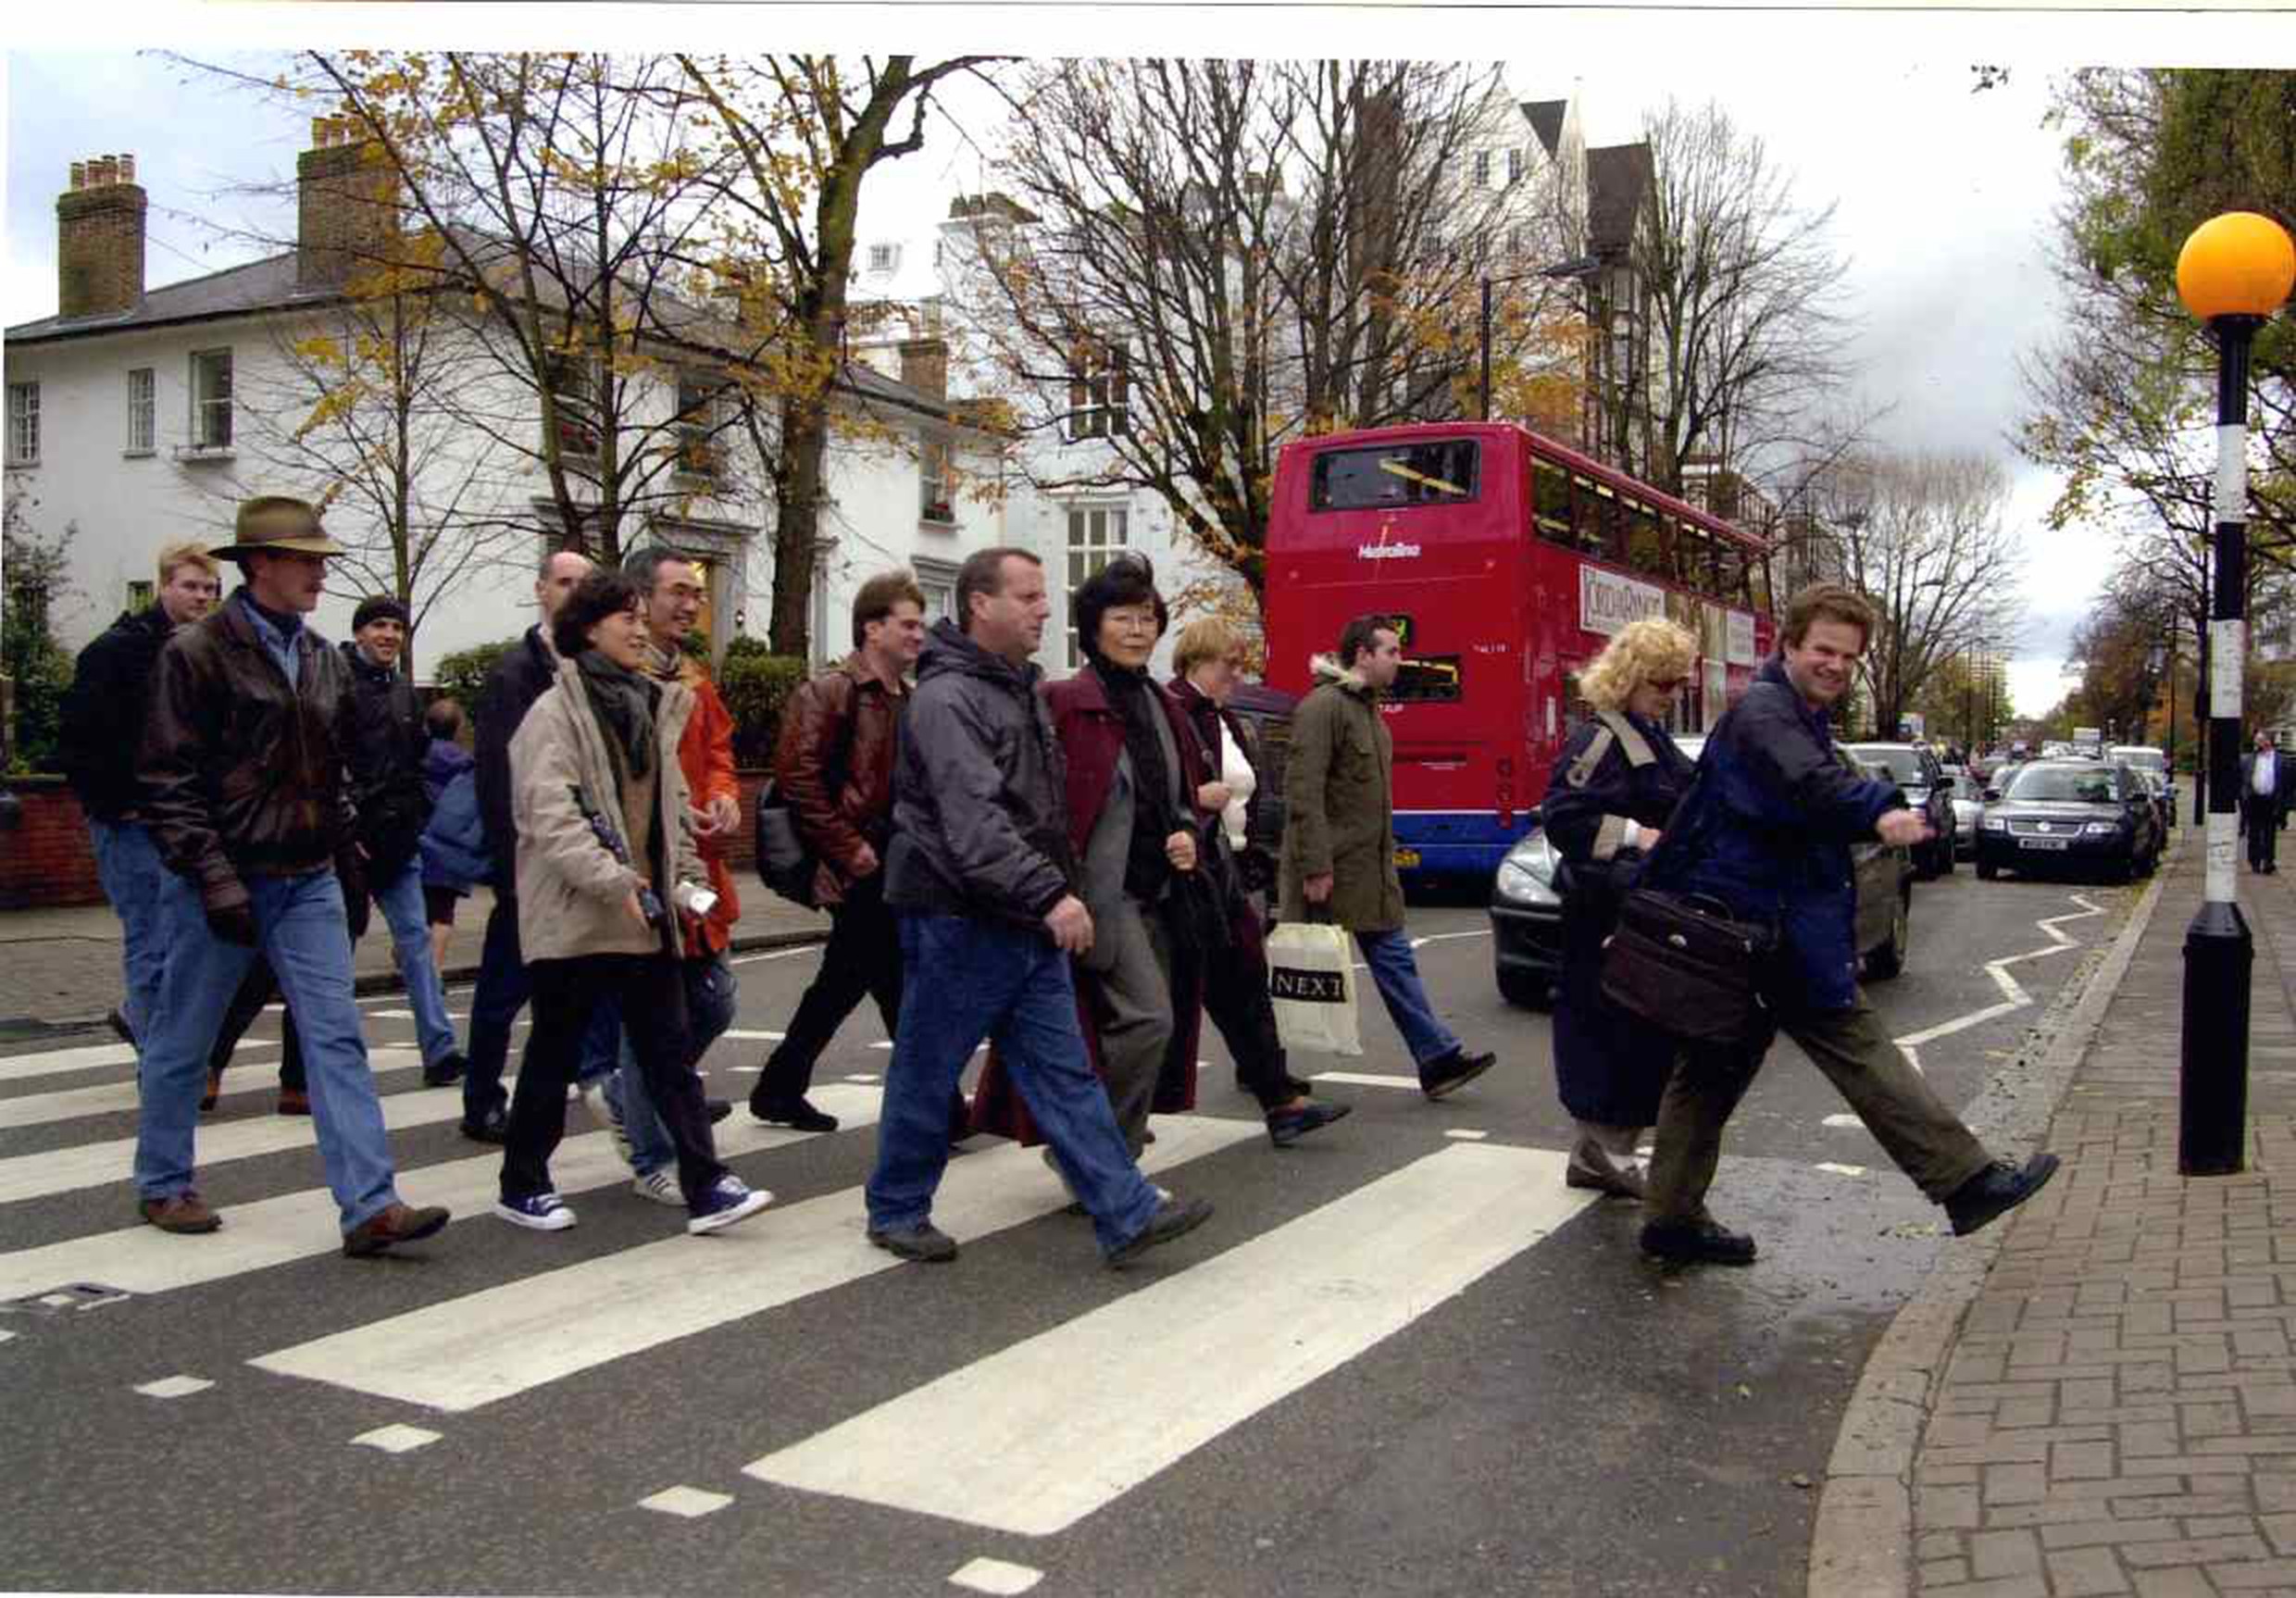 London Beatles Tours on Abbey Road